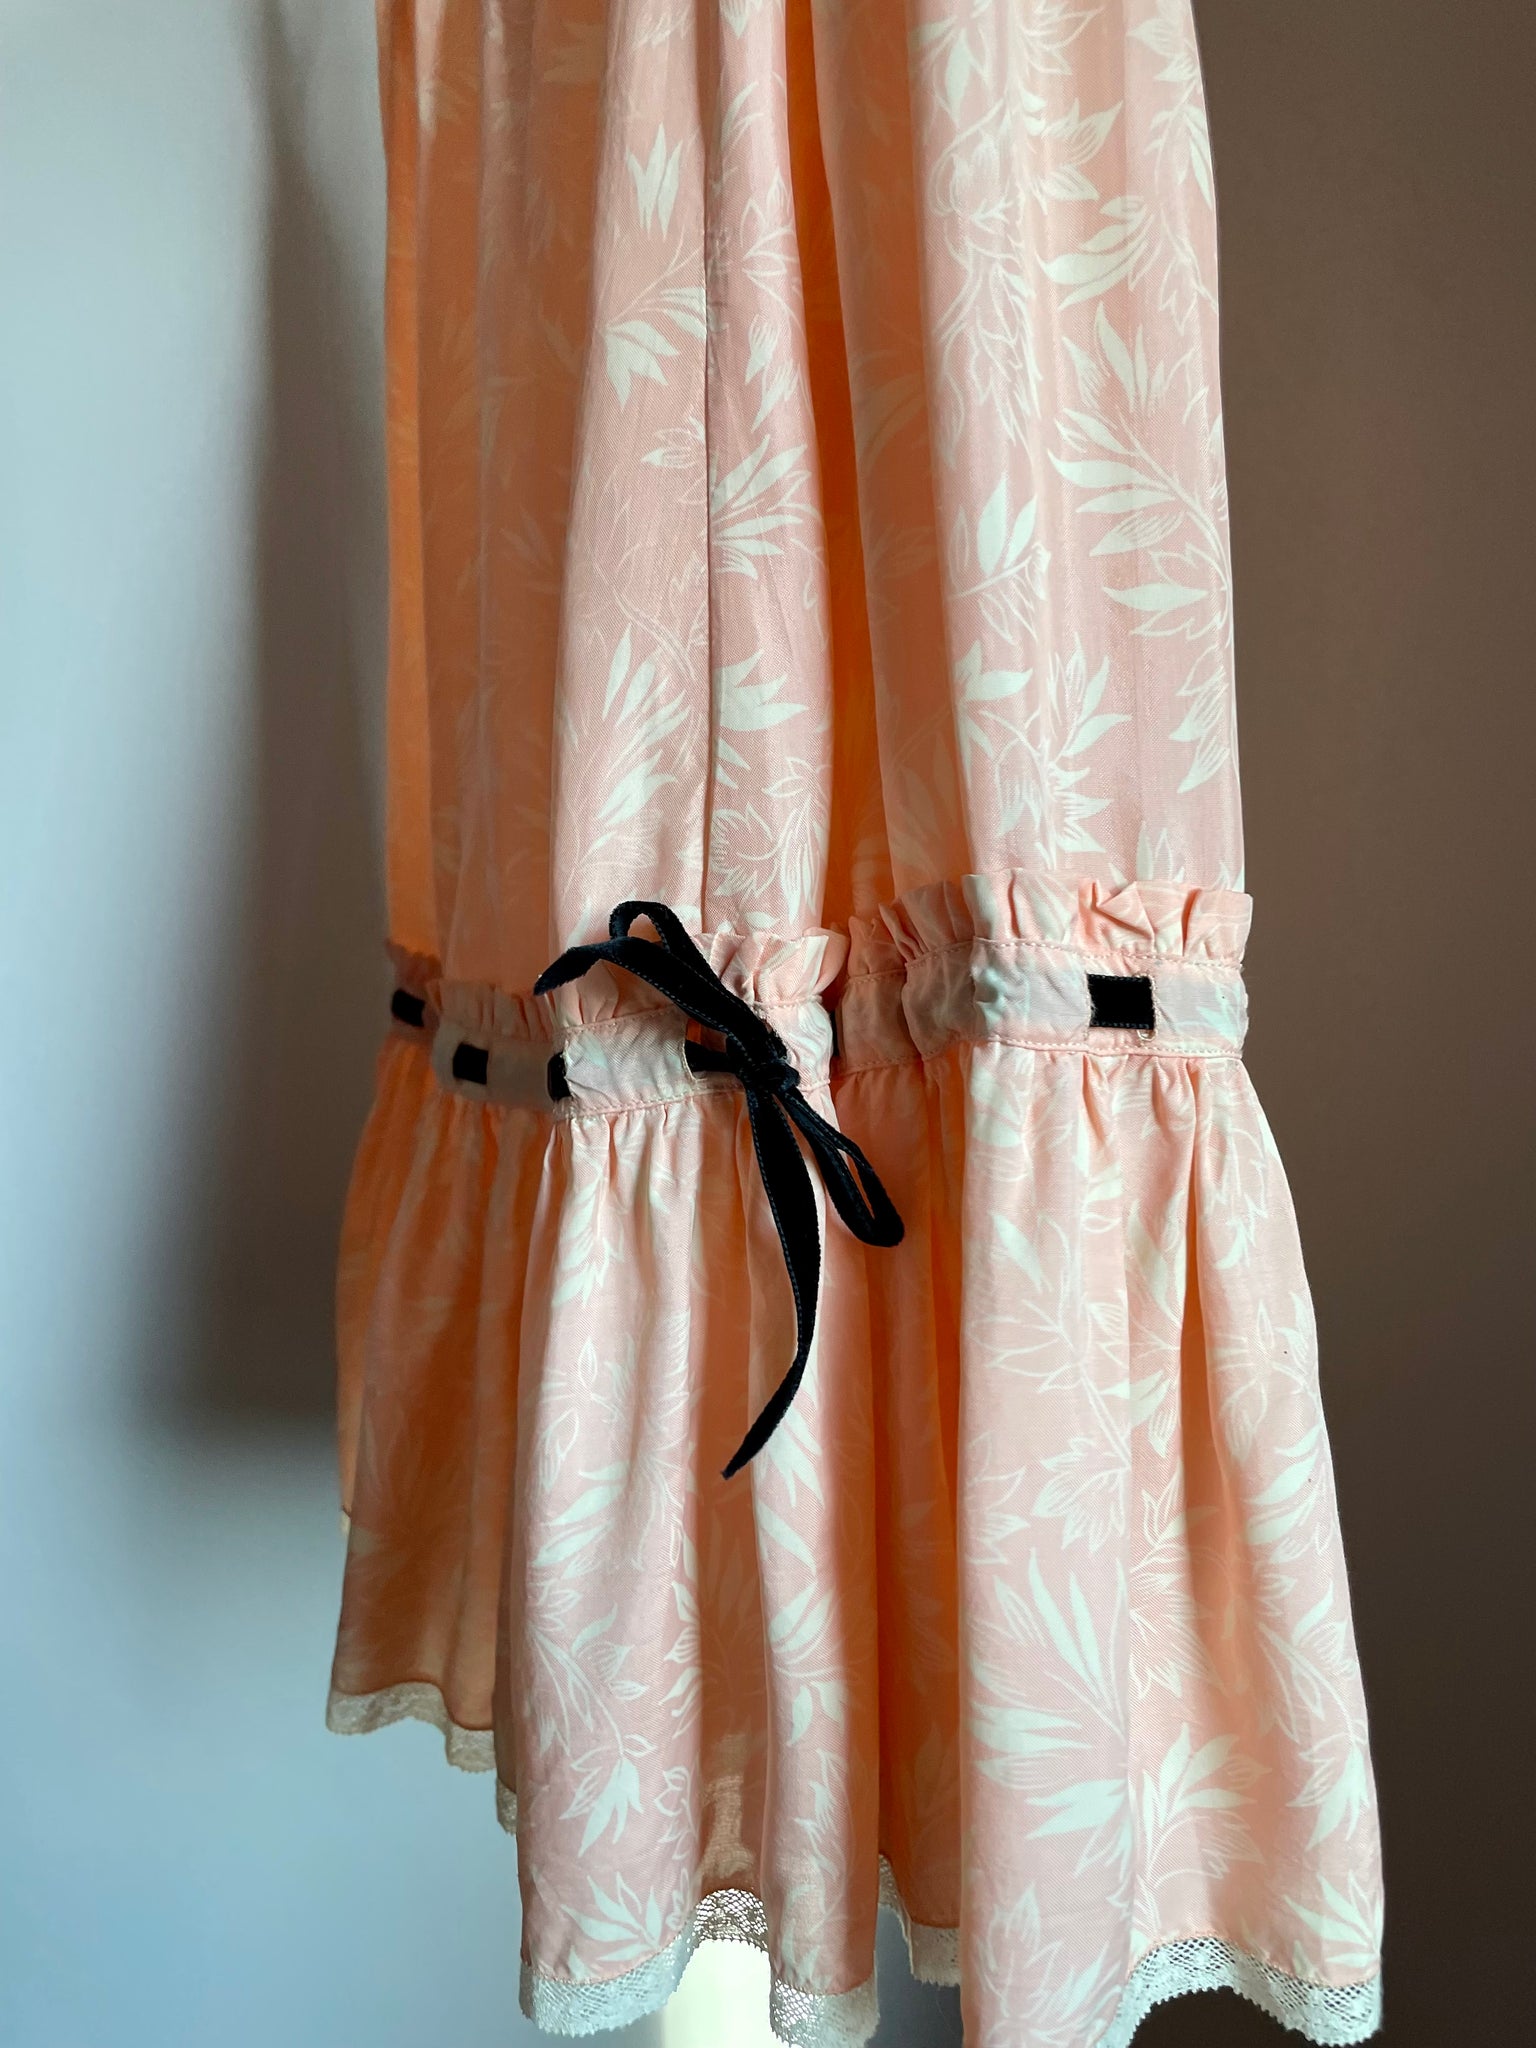 1940s Printed Rayon Peplum Skirt Ruffle Lace Velvet Ribbon Pink and White Leaf Print